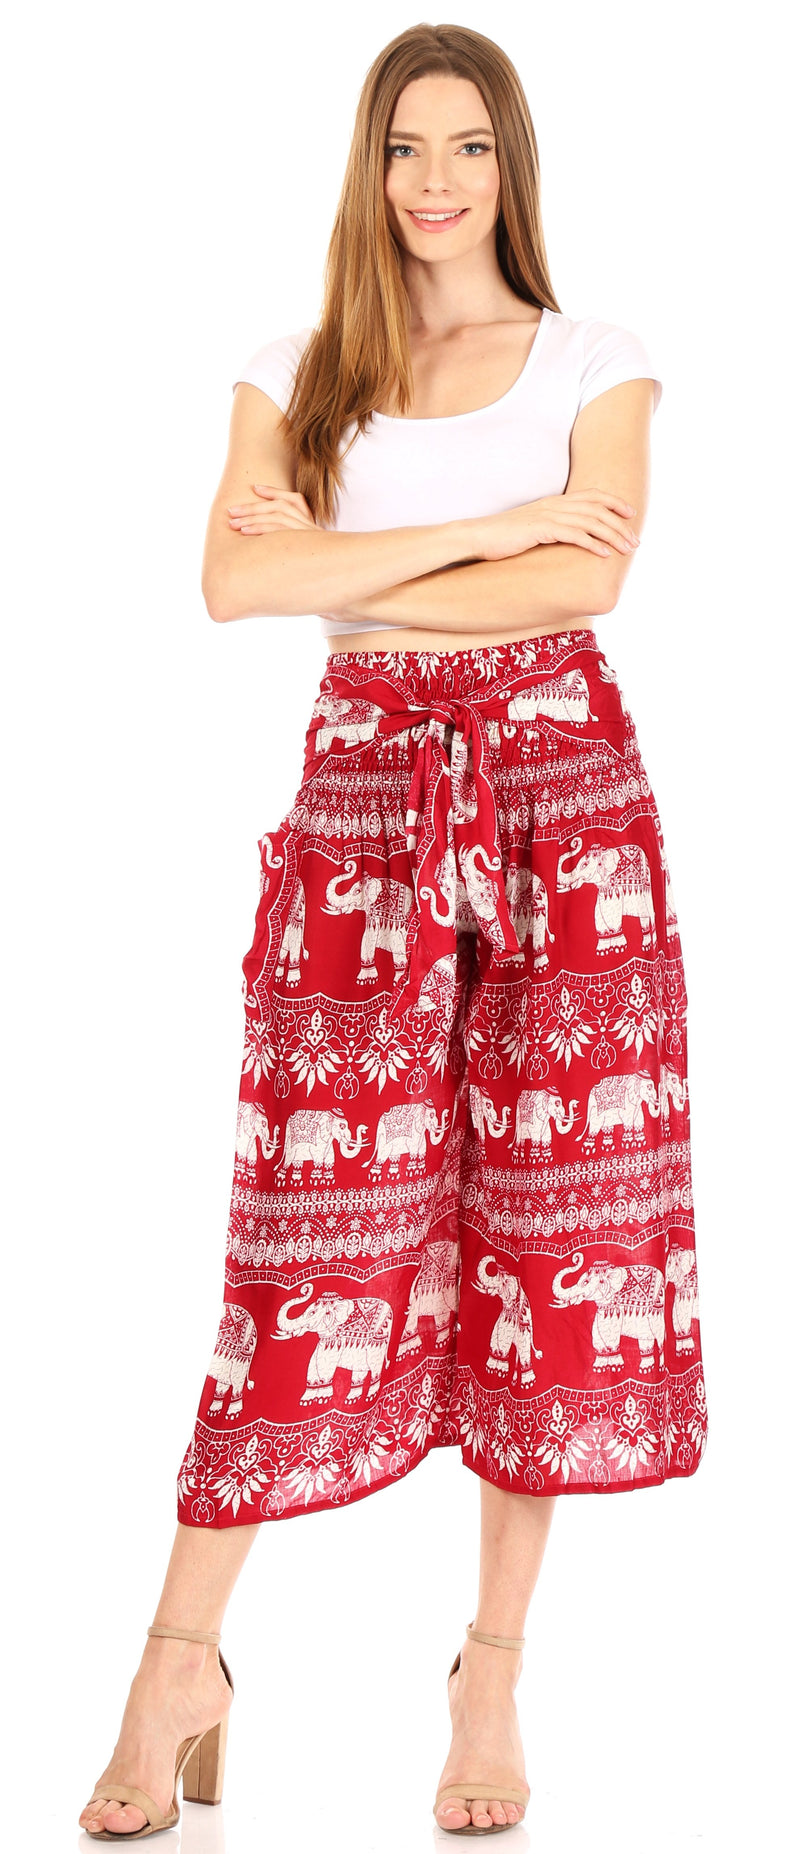 Sakkas Lilja Women's Loose Wide Leg Printed Elephant Pants Elastic Waist w/Pockets